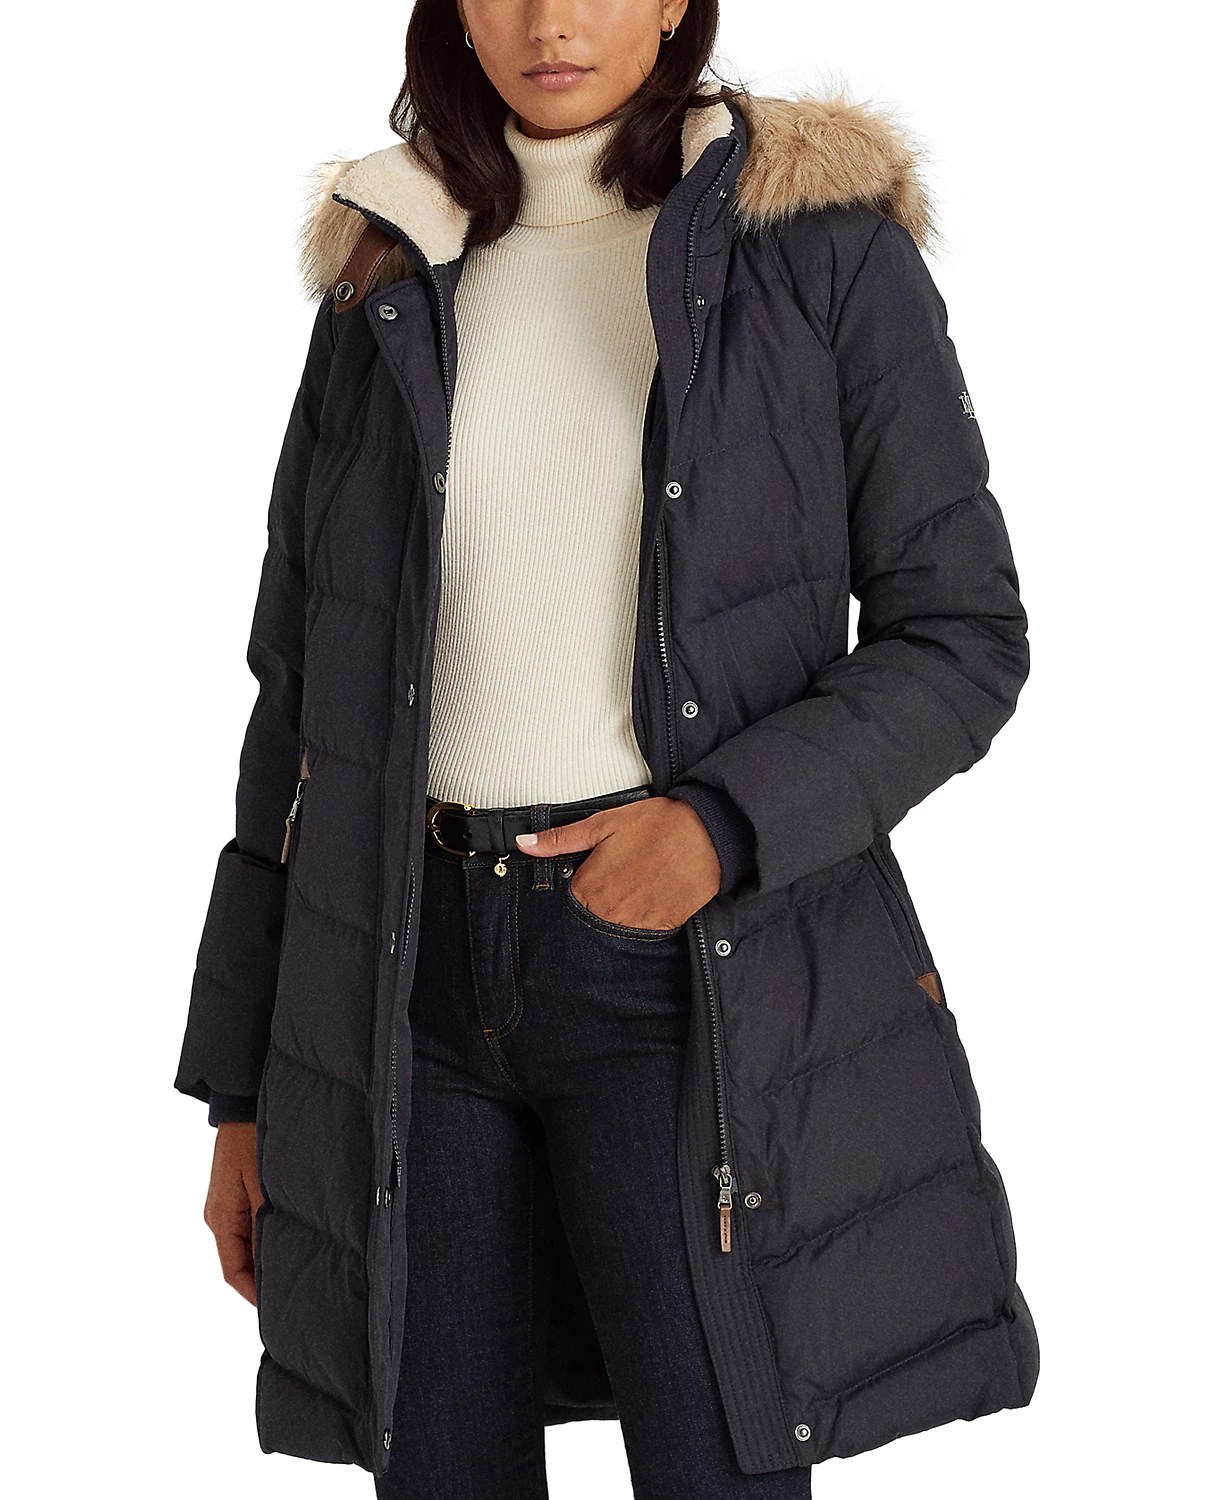 Macy's Winter Down Coats Hot Sale | bellvalefarms.com